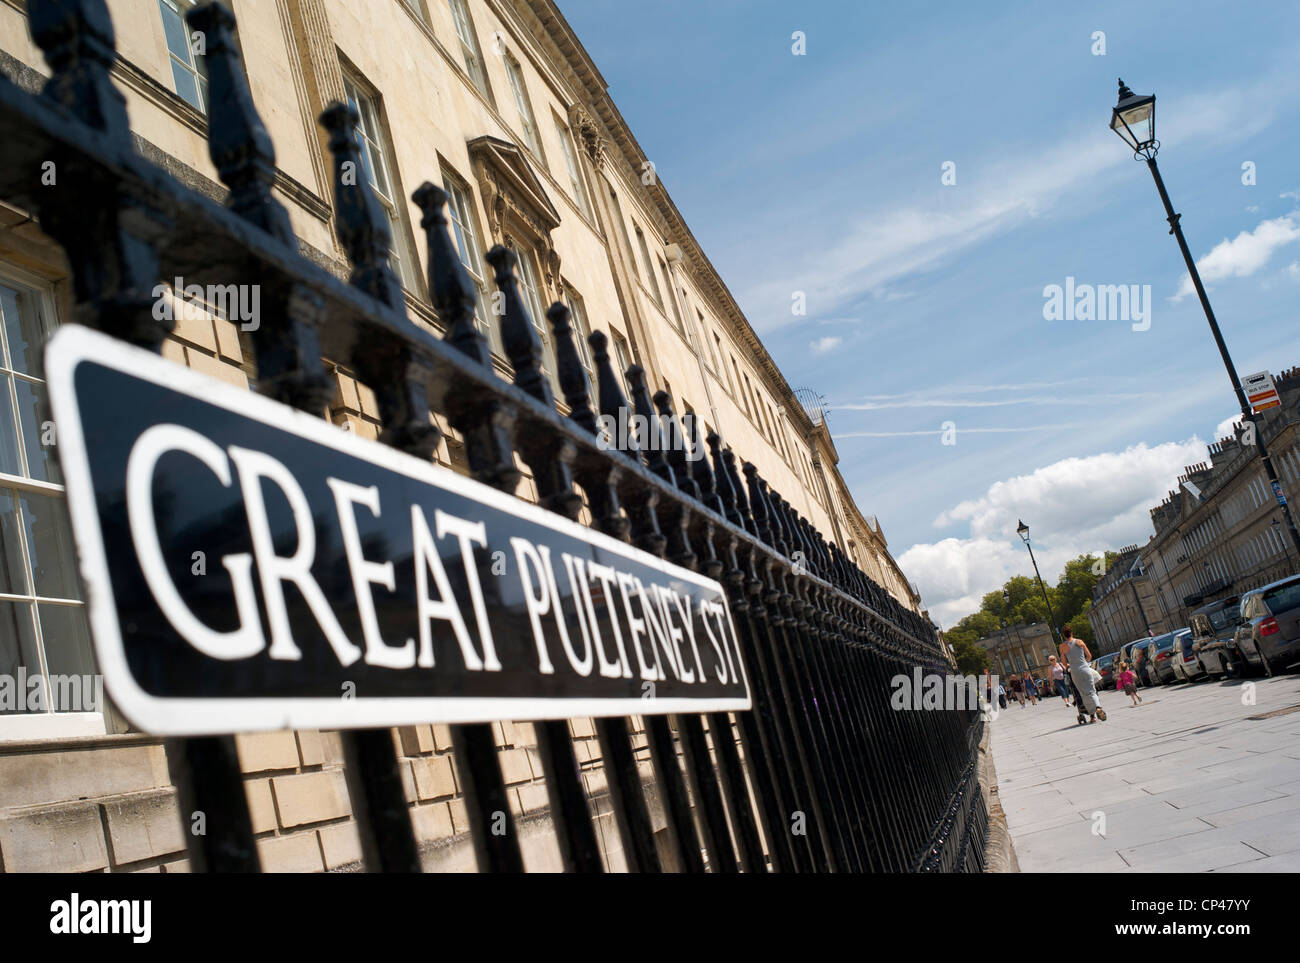 Great Pulteney Street, Bath, UK Stock Photo